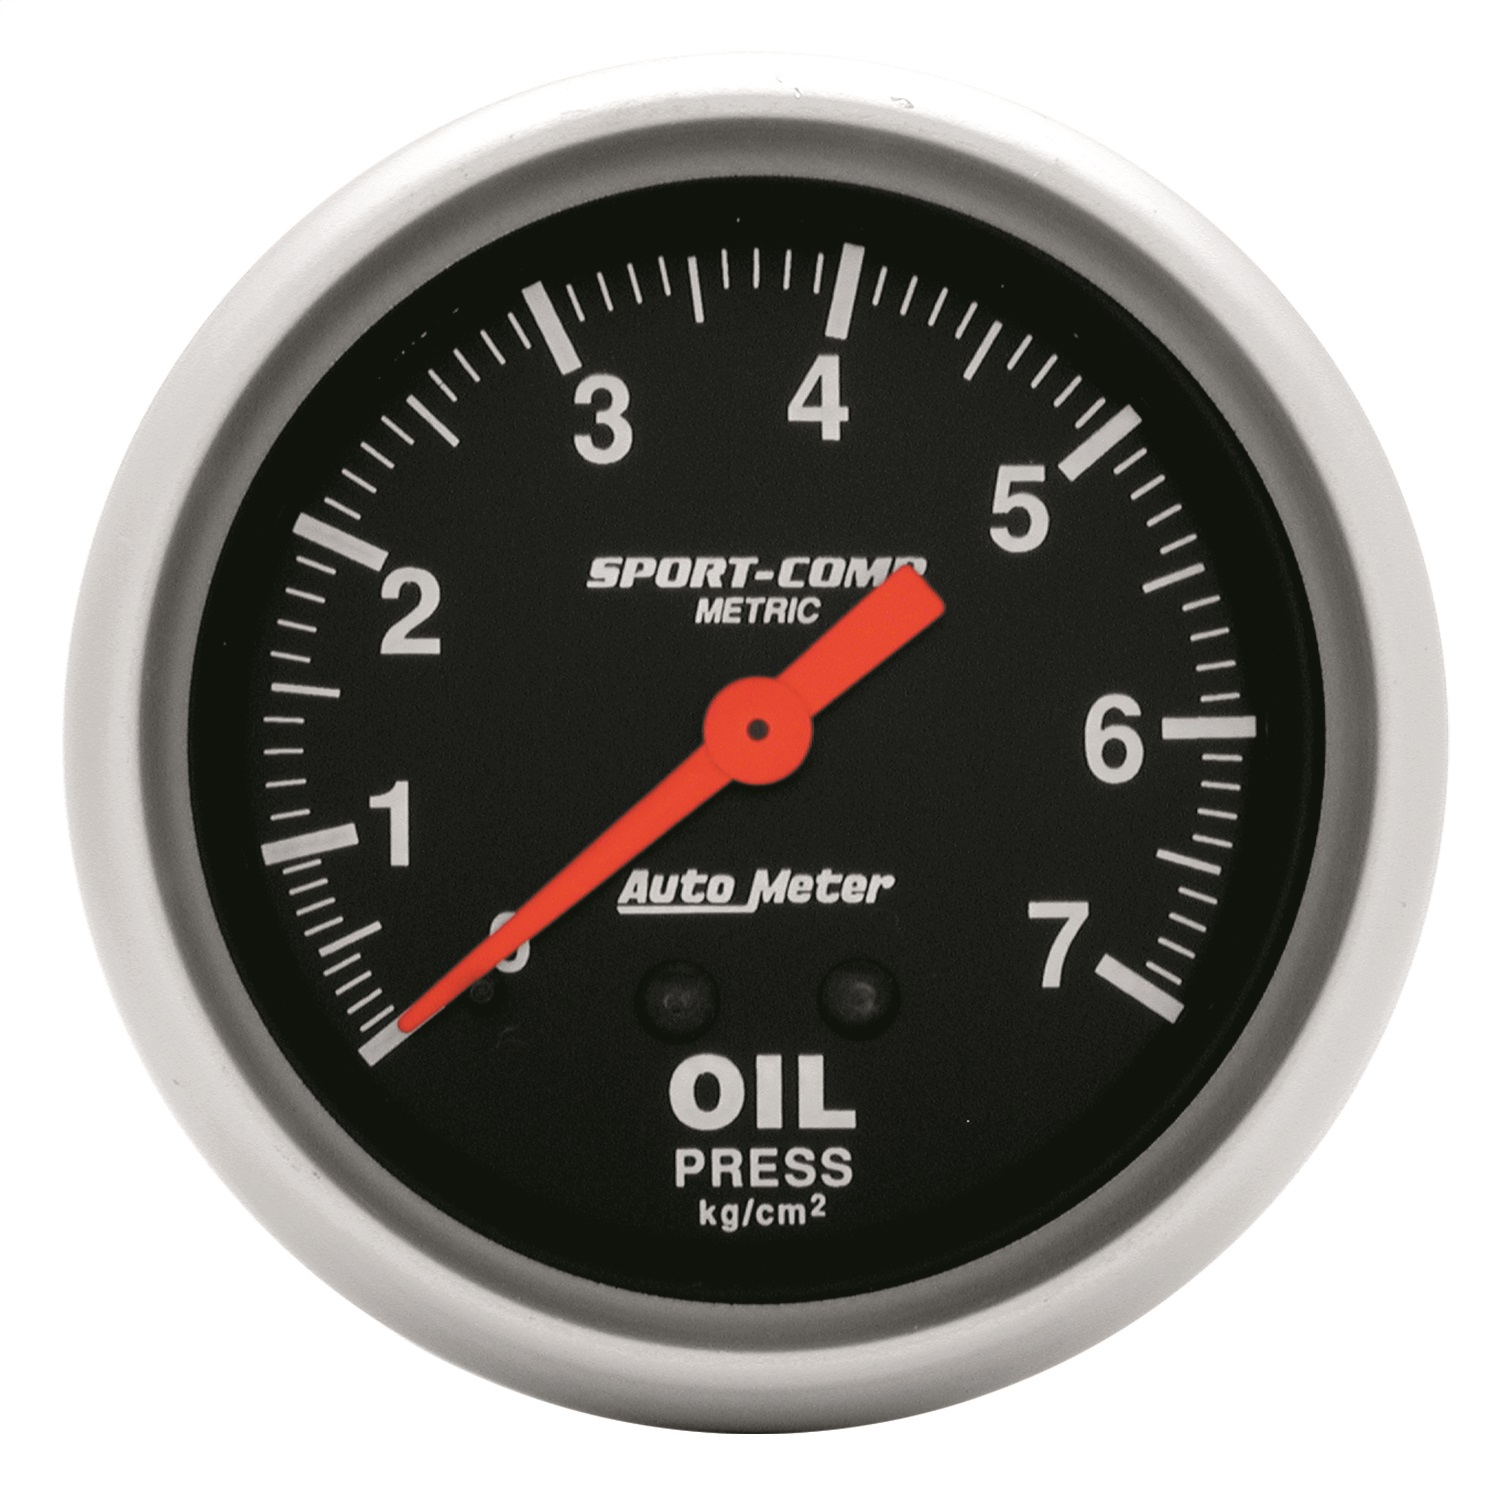 Auto Meter Auto Meter 3421-J Sport-Comp; Mechanical Metric Oil Pressure Gauge